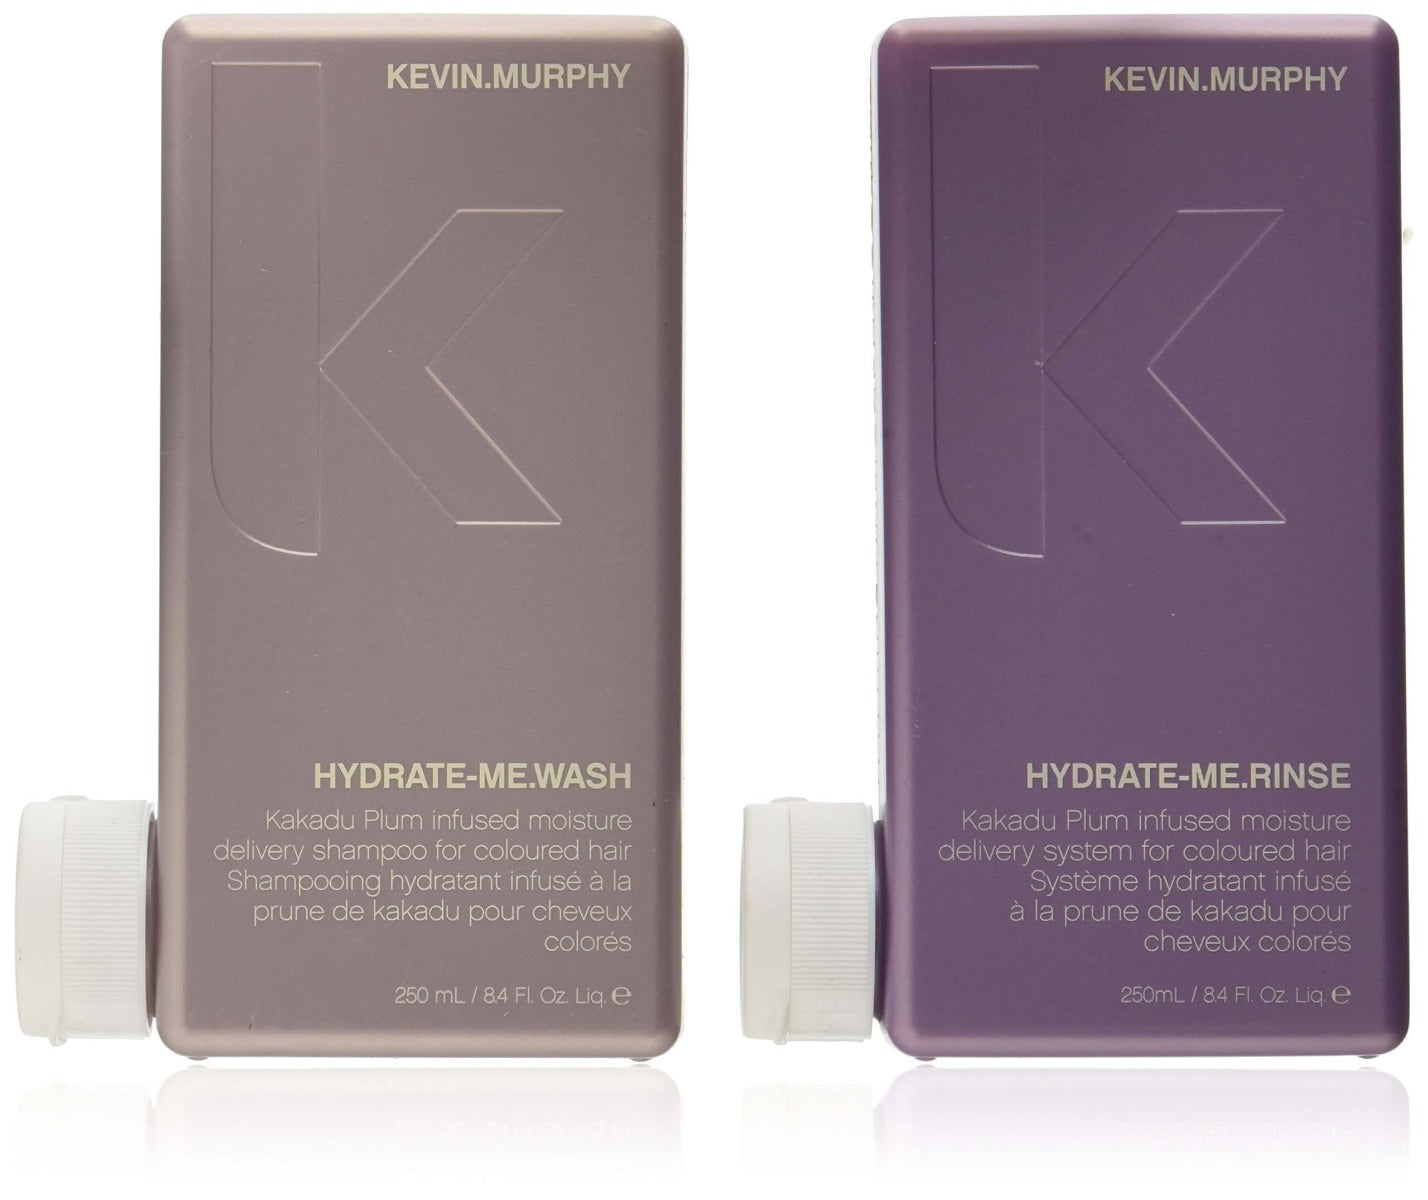 Kevin.Murphy Hydrate me Wash & Duo 8.5oz Shampoo Zone